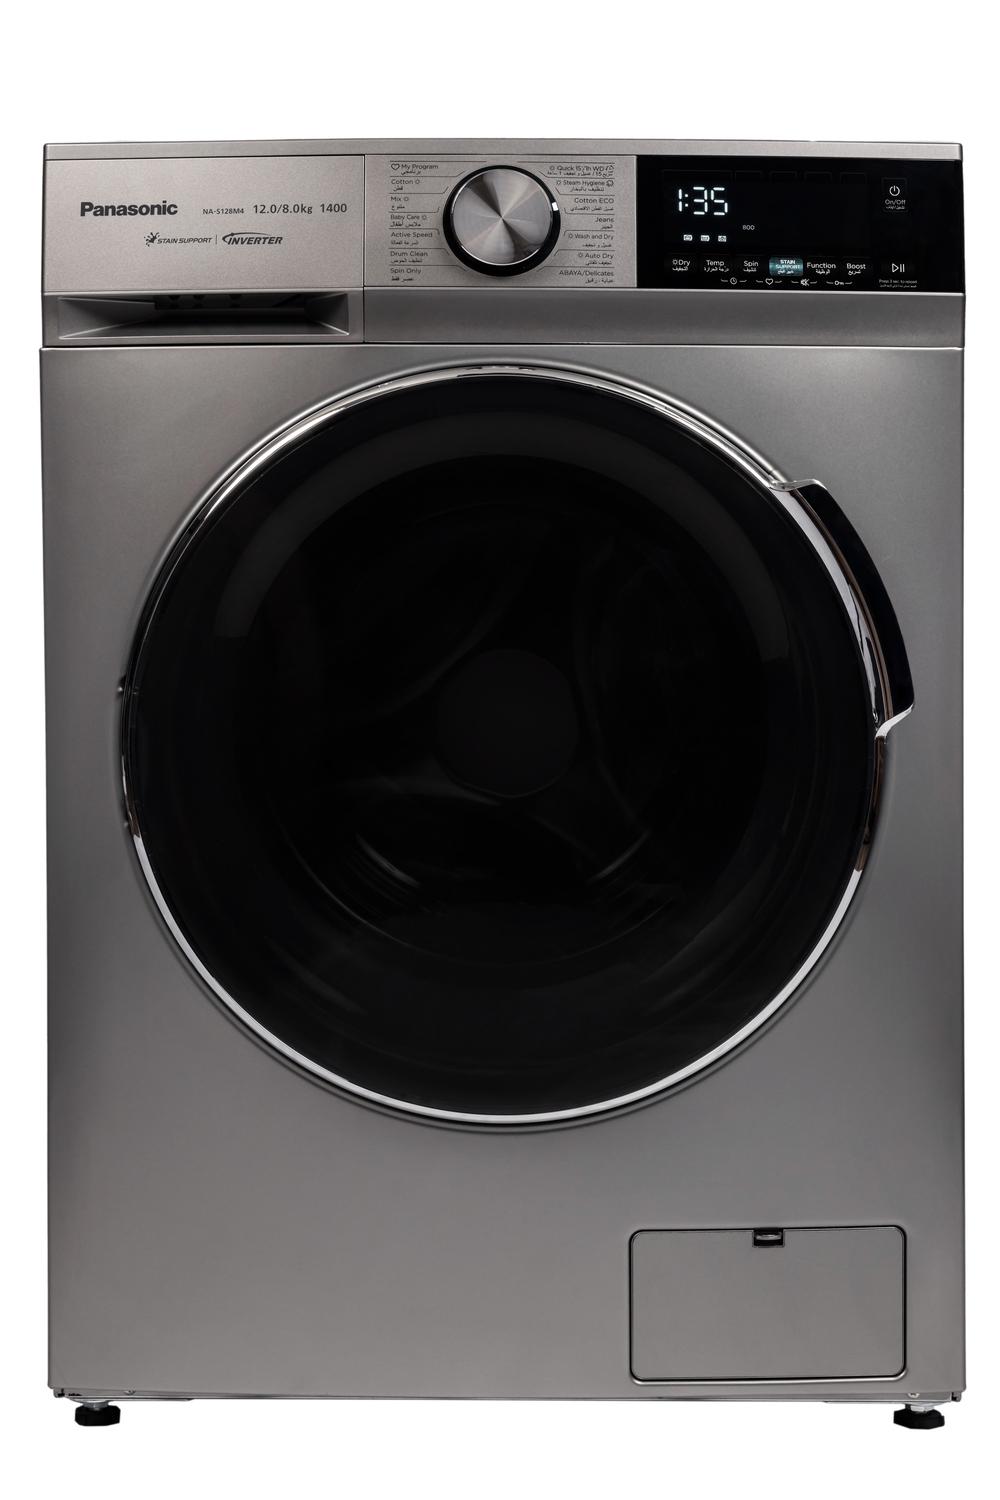 Panasonic 12/8 Kg Washer & Dryer | Silver  - Modern Electronics